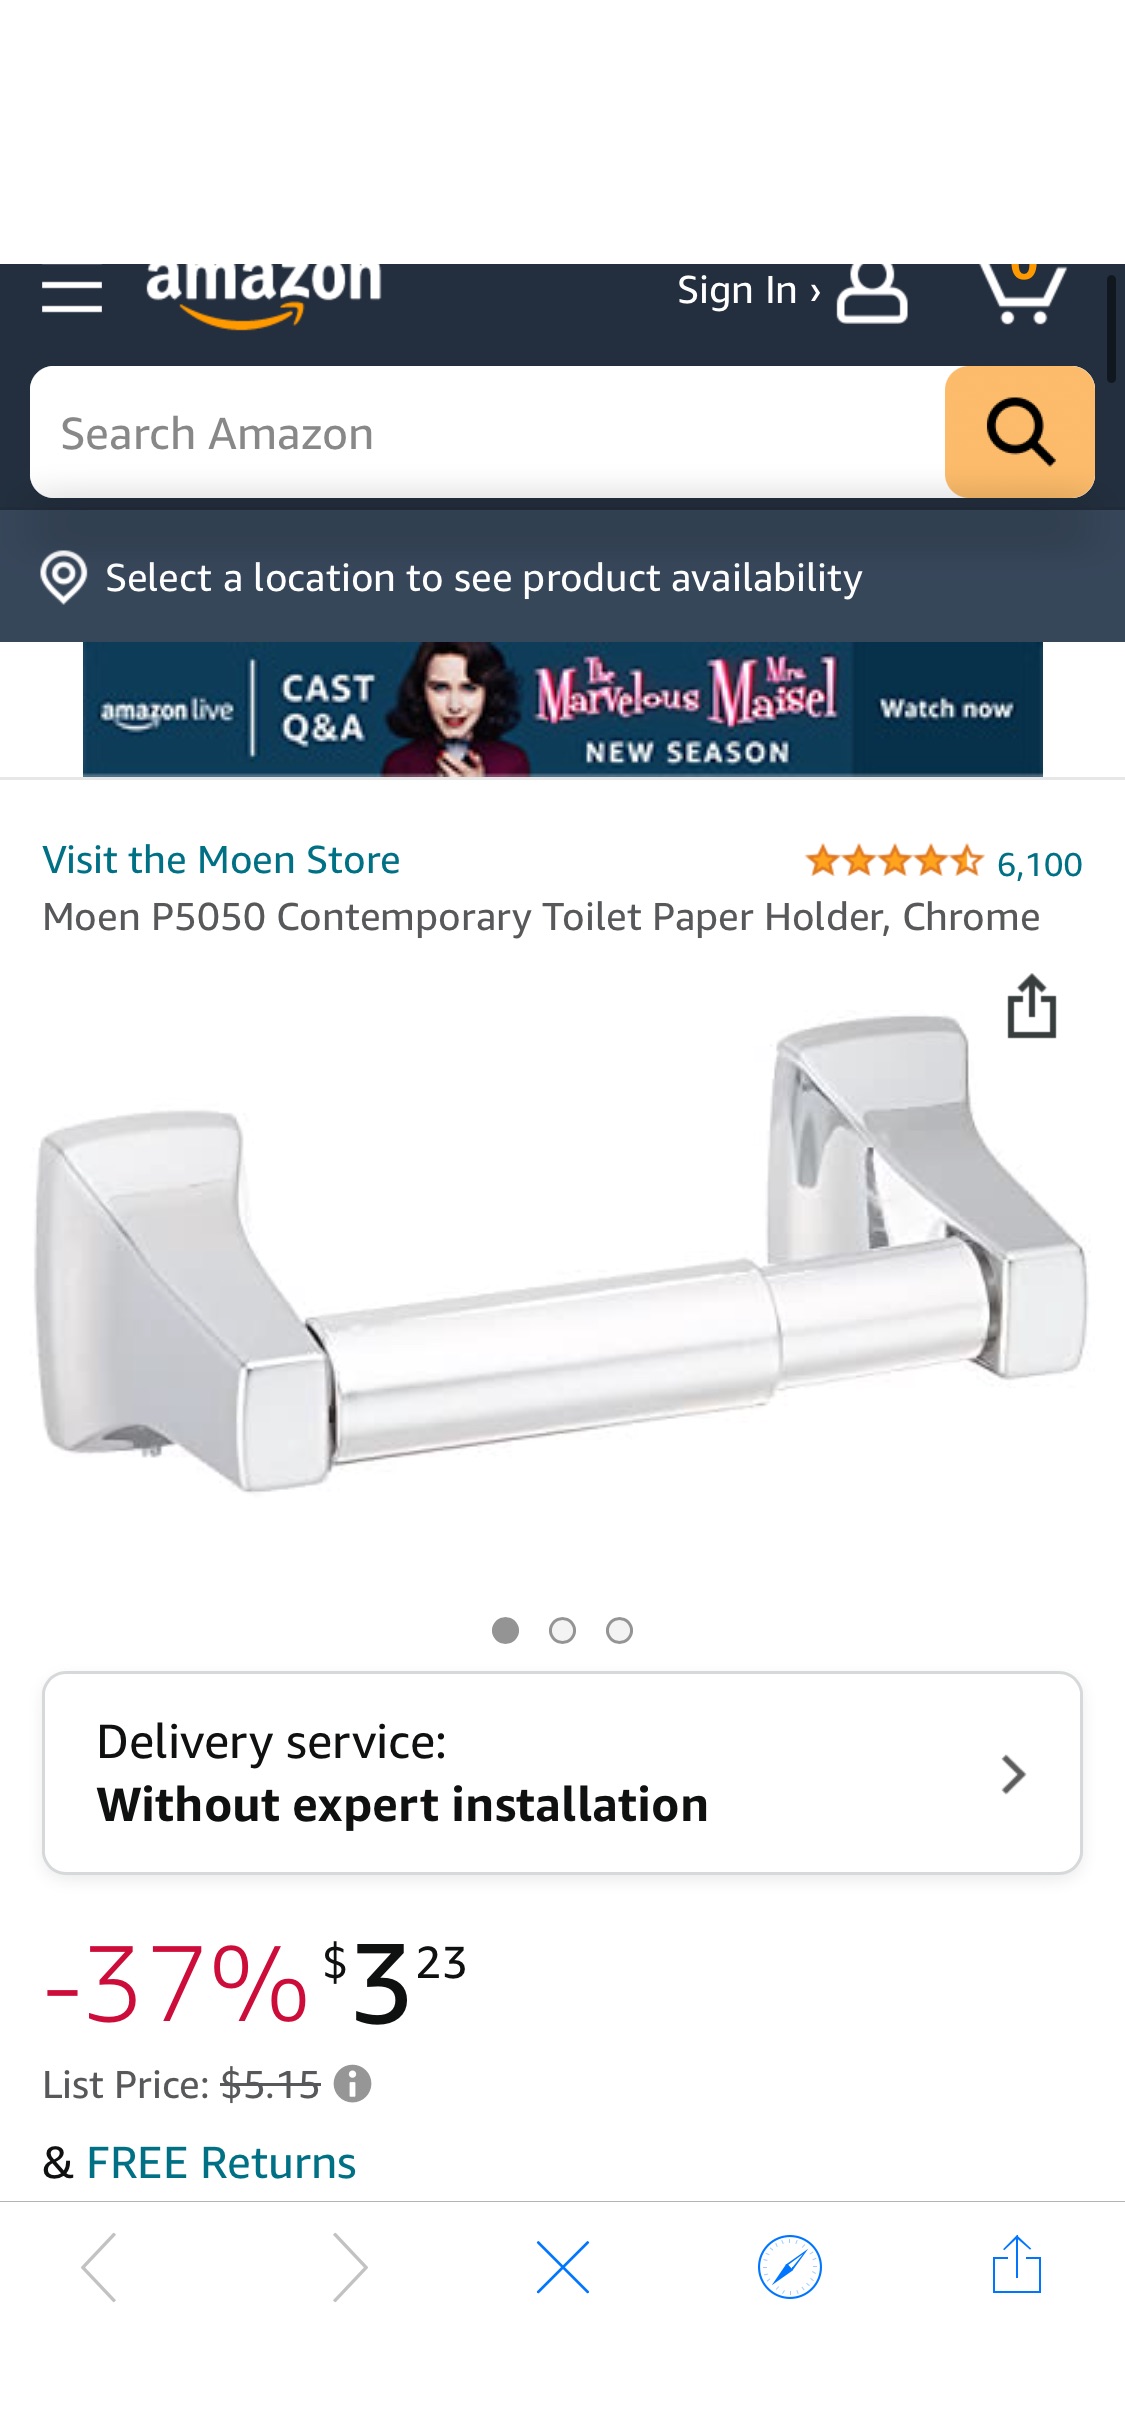 Moen P5050 Contemporary Toilet Paper Holder, Chrome - Toilet Paper Holders - Amazon.com 纸巾架